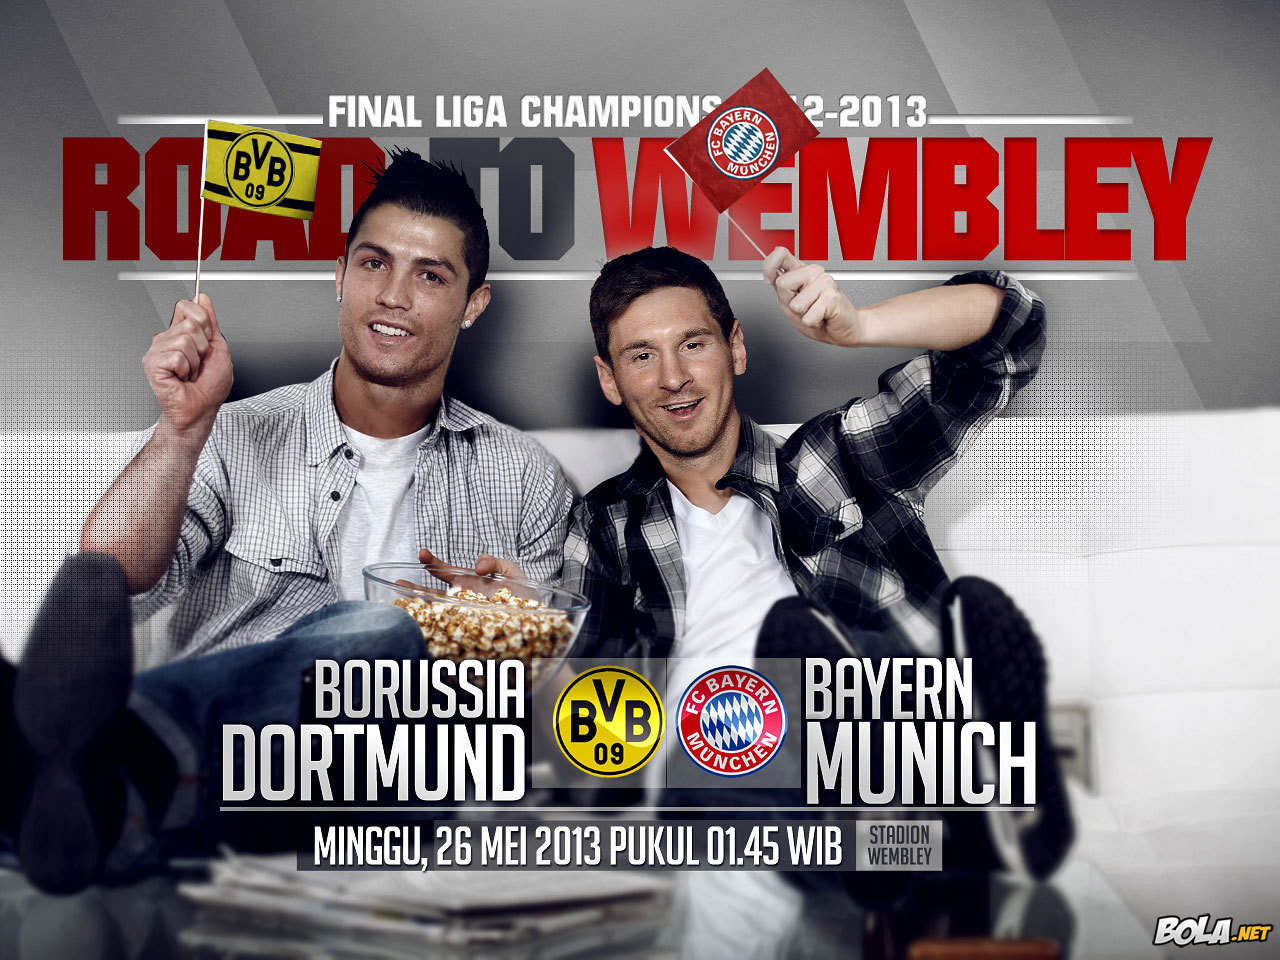 Download Wallpaper Ronaldo Vs Messi Bolanet